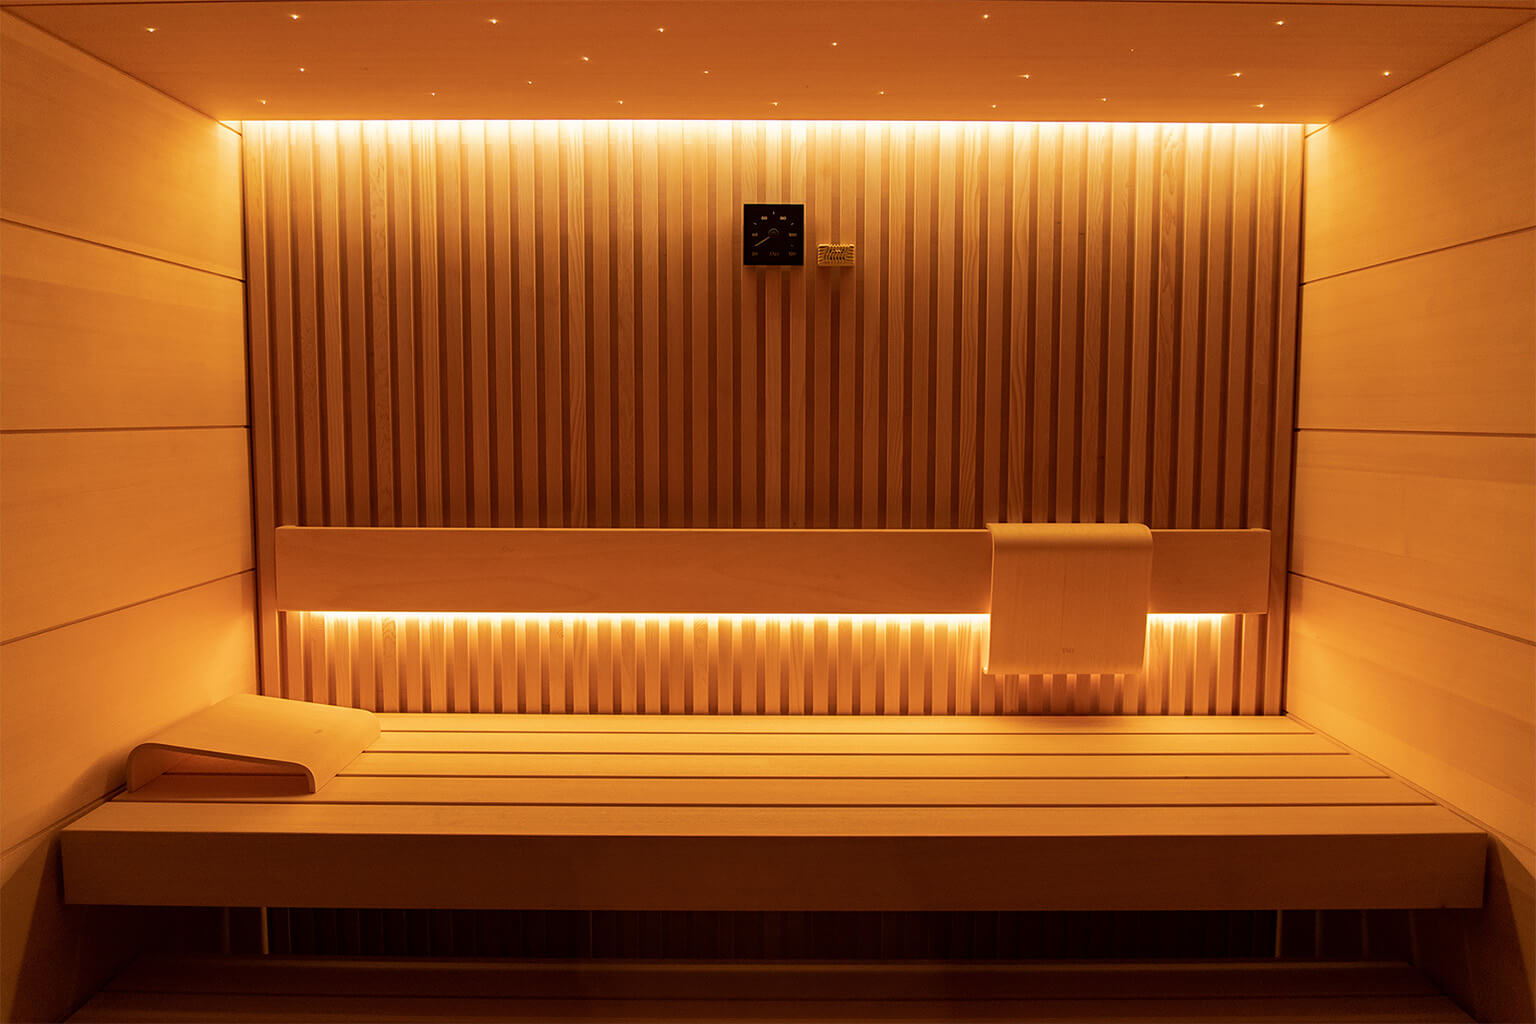 Sauna lighting: an important detail to make your sauna cabin more comfortable